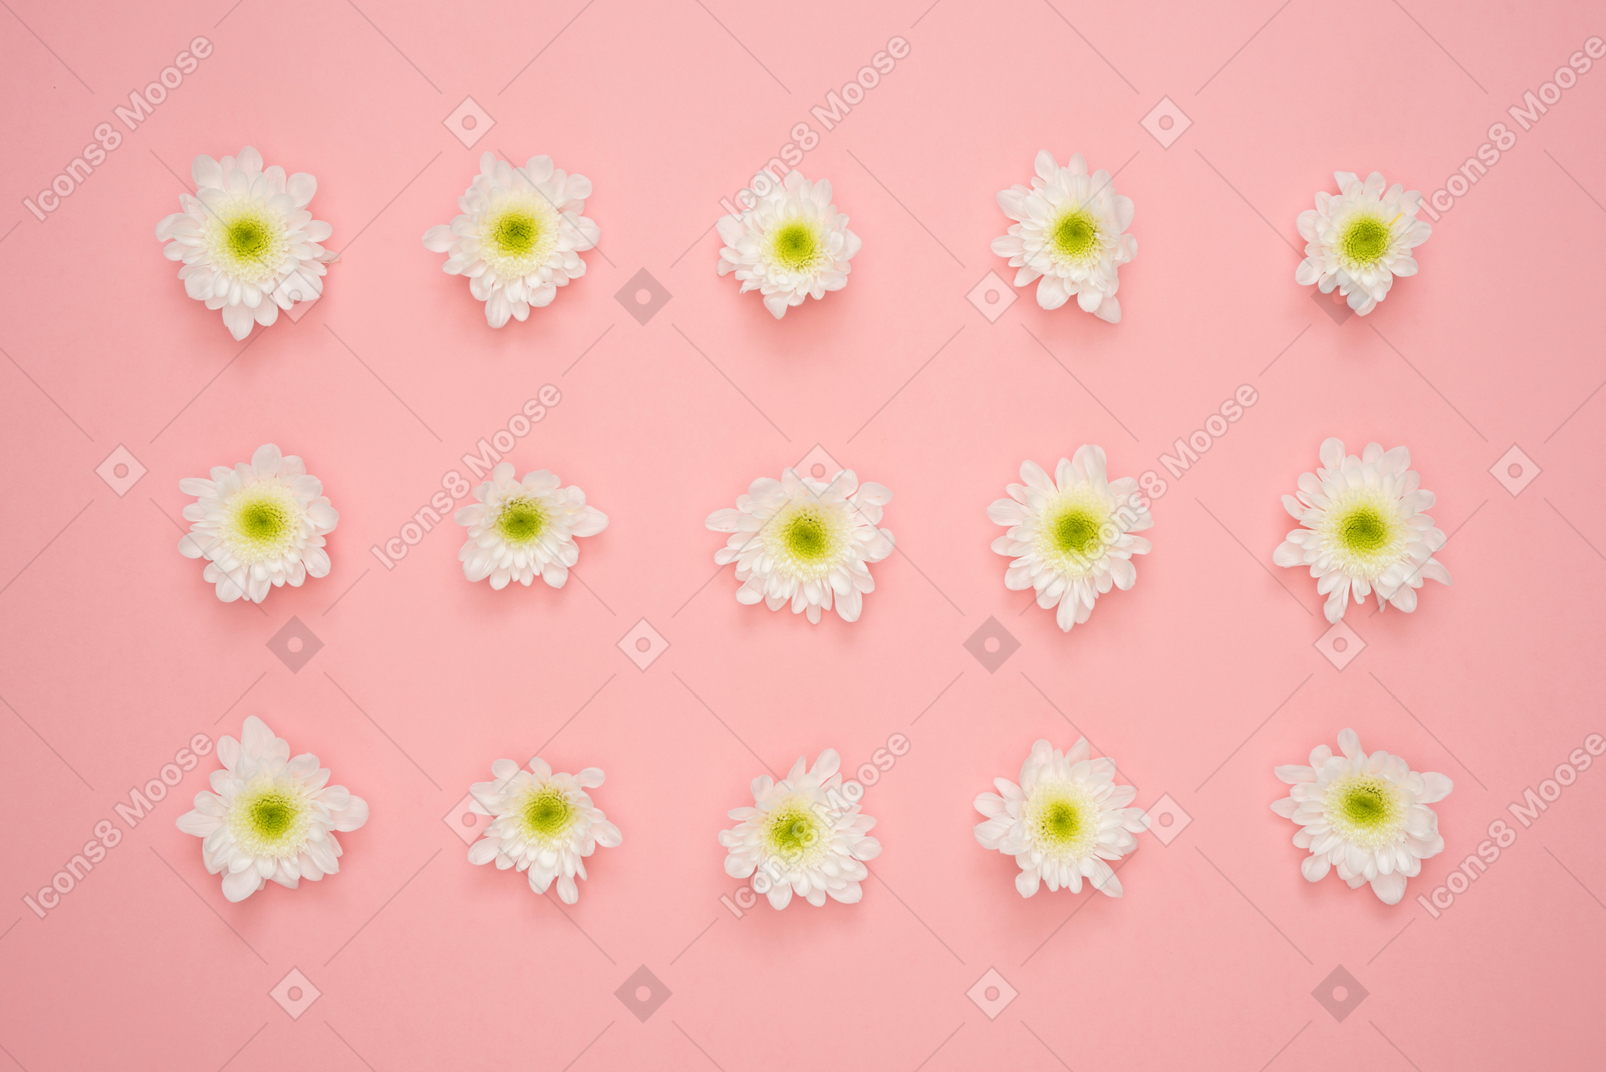 Flower heads